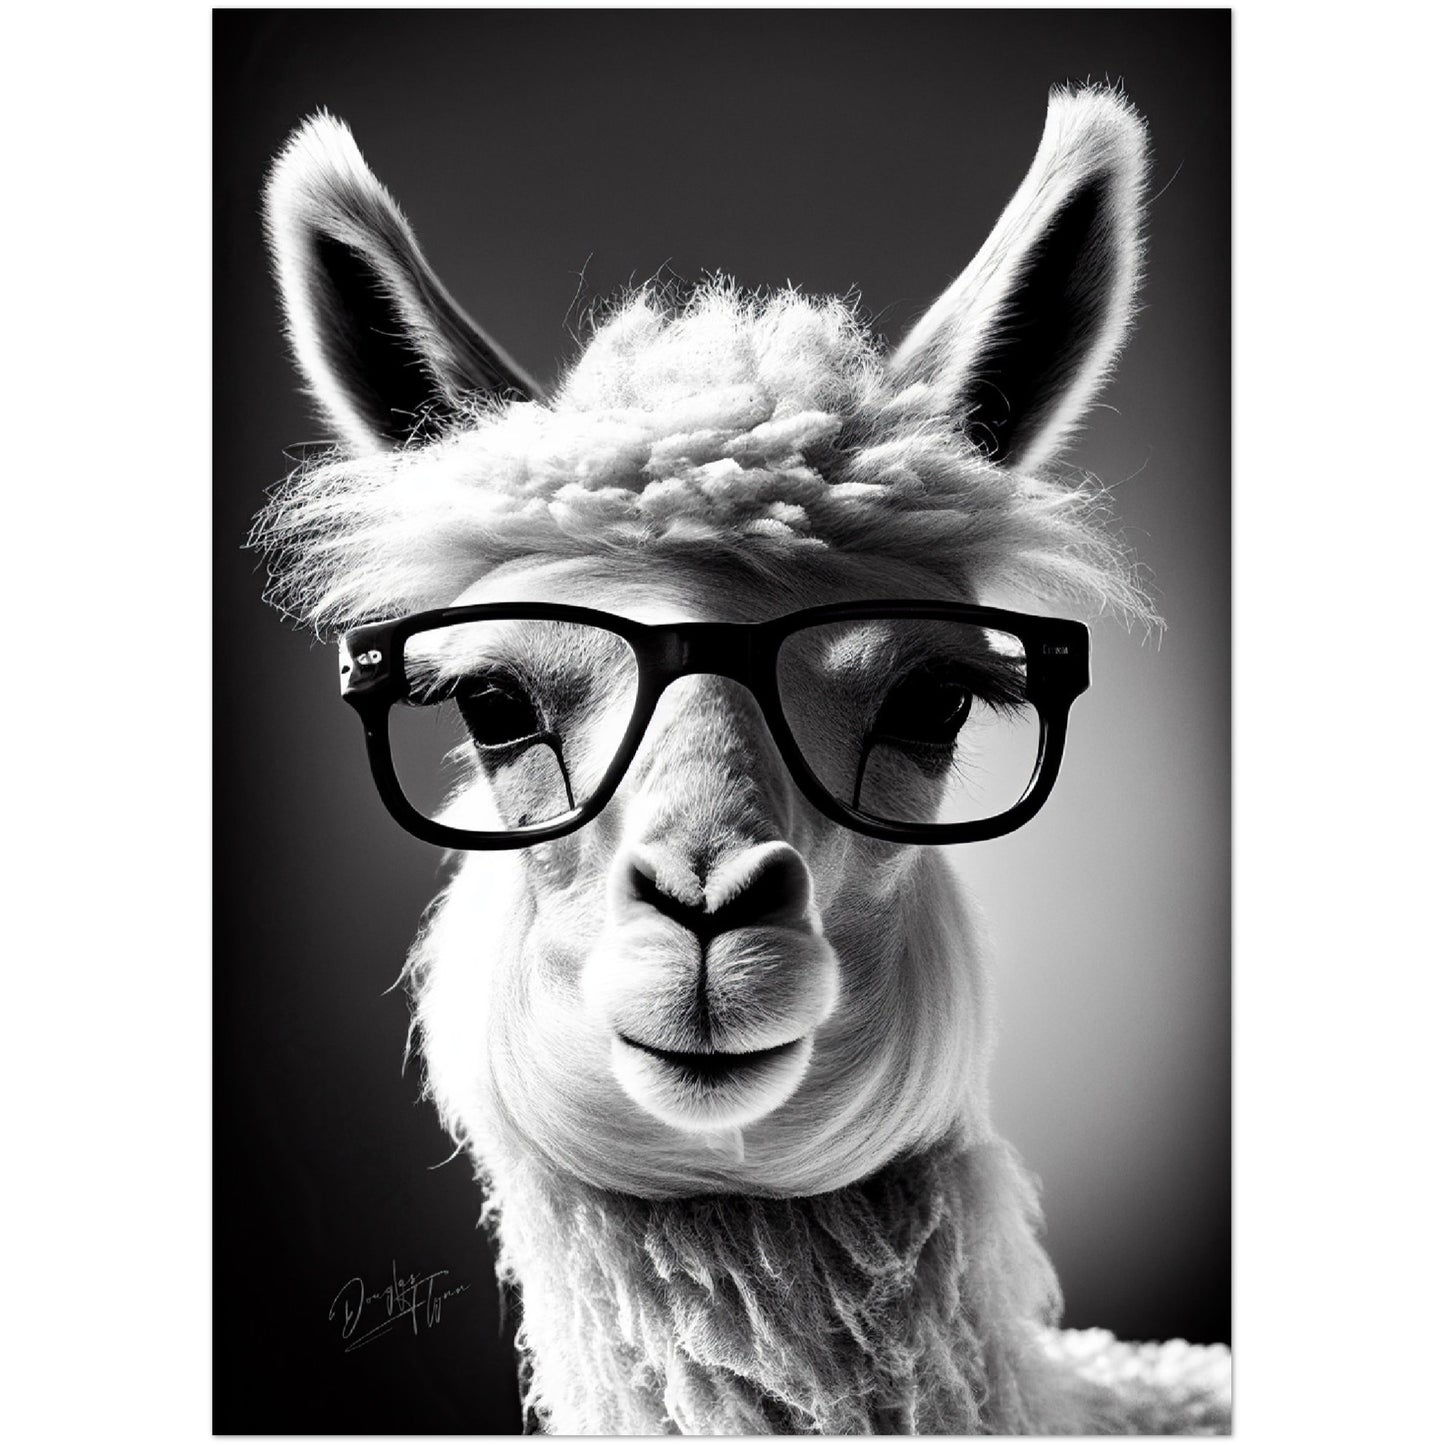 »Llama Logic« retro poster